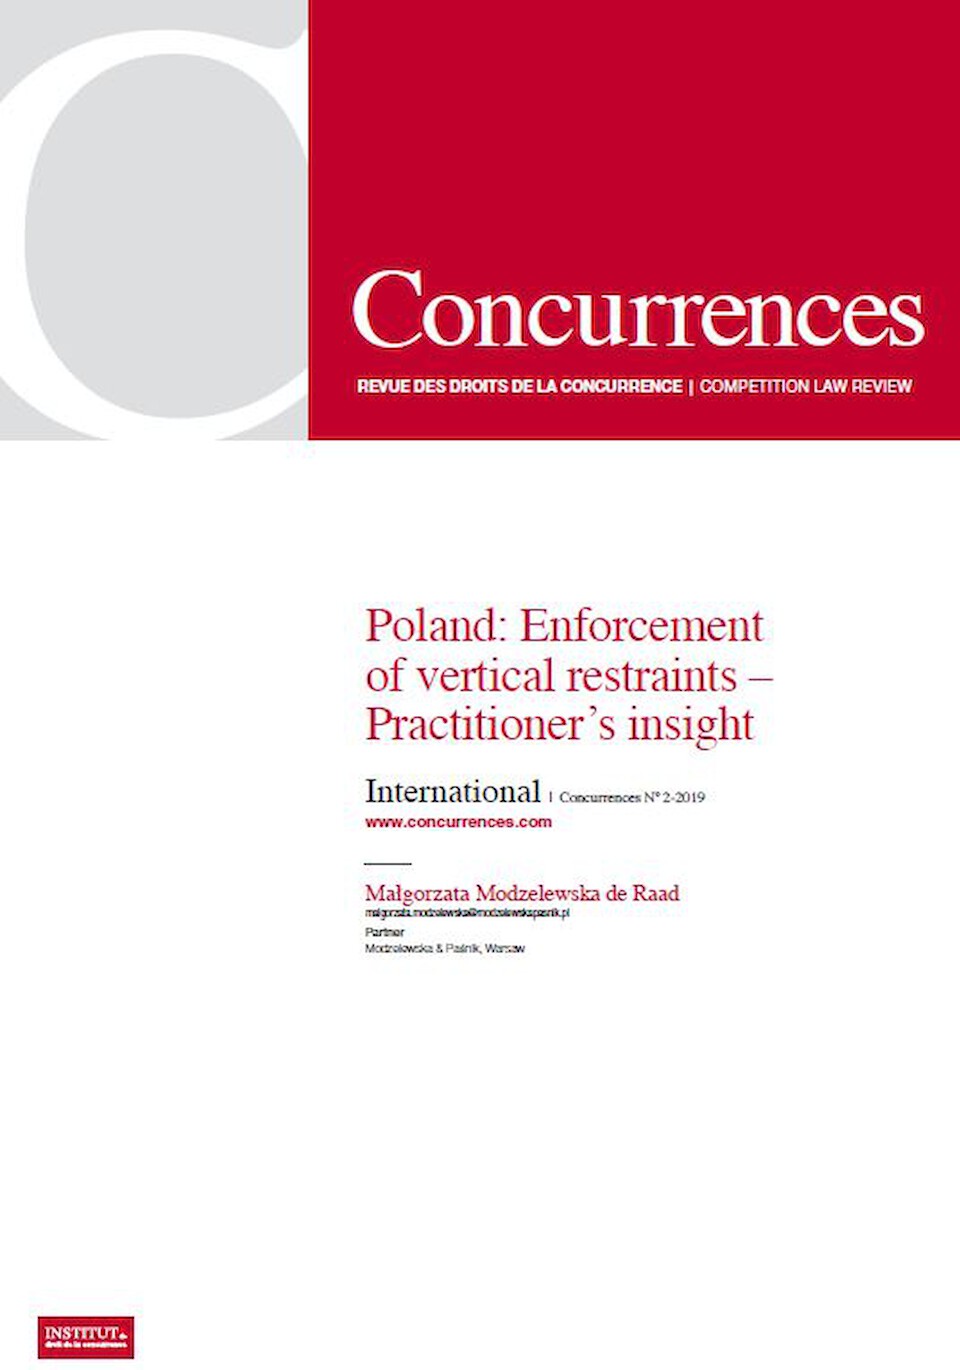 Poland: Enforcement of vertical restraints – Practitioner’s insight